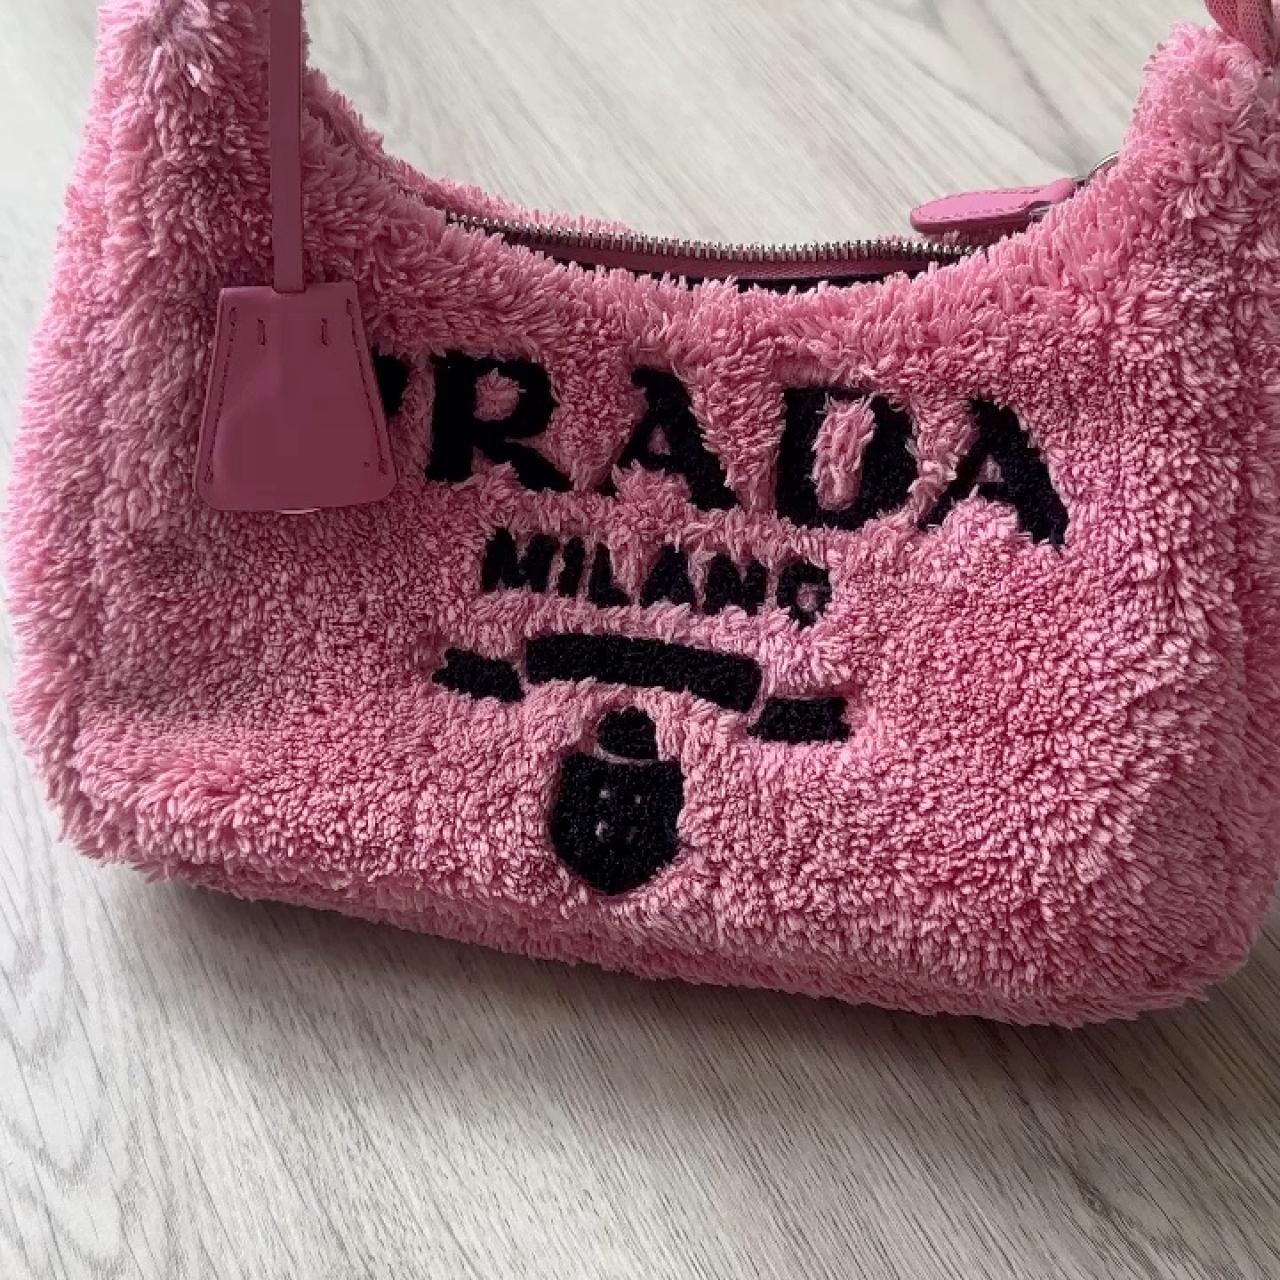 Prada Re-Edition 2000 Terry Cloth Mini Bag (Pink)